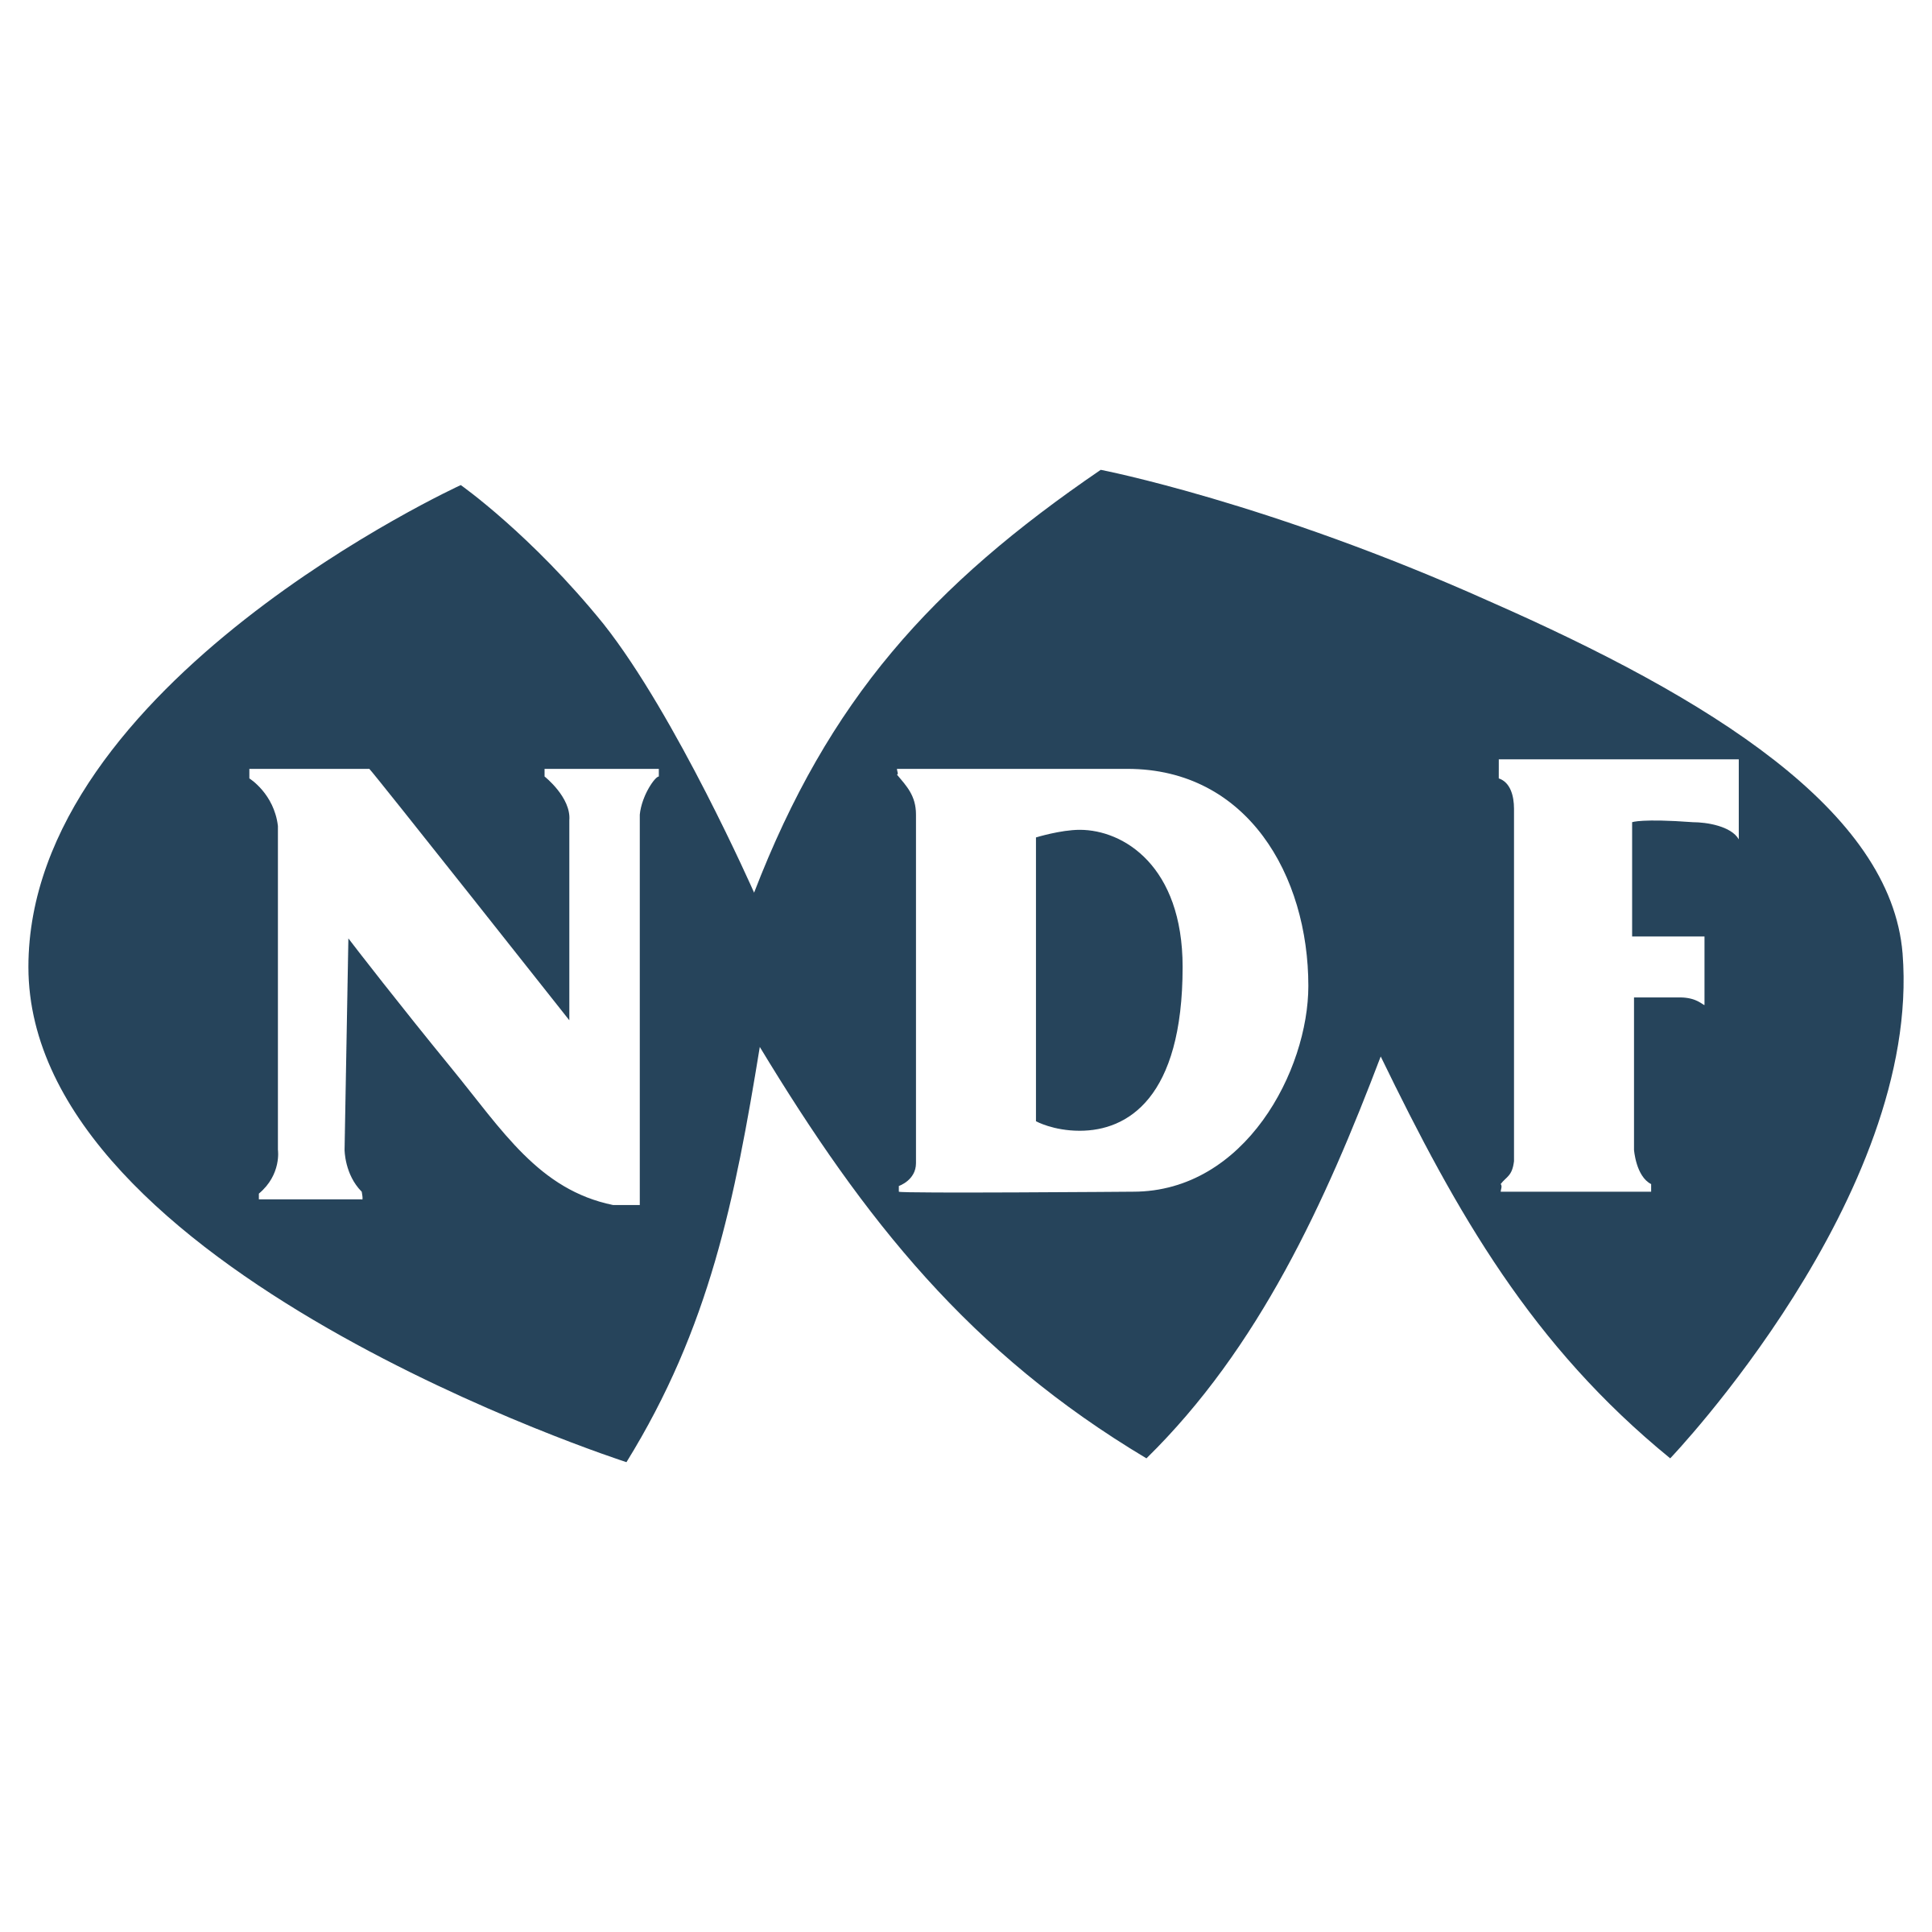 NDF Logo - NDF Logo PNG Transparent & SVG Vector - Freebie Supply